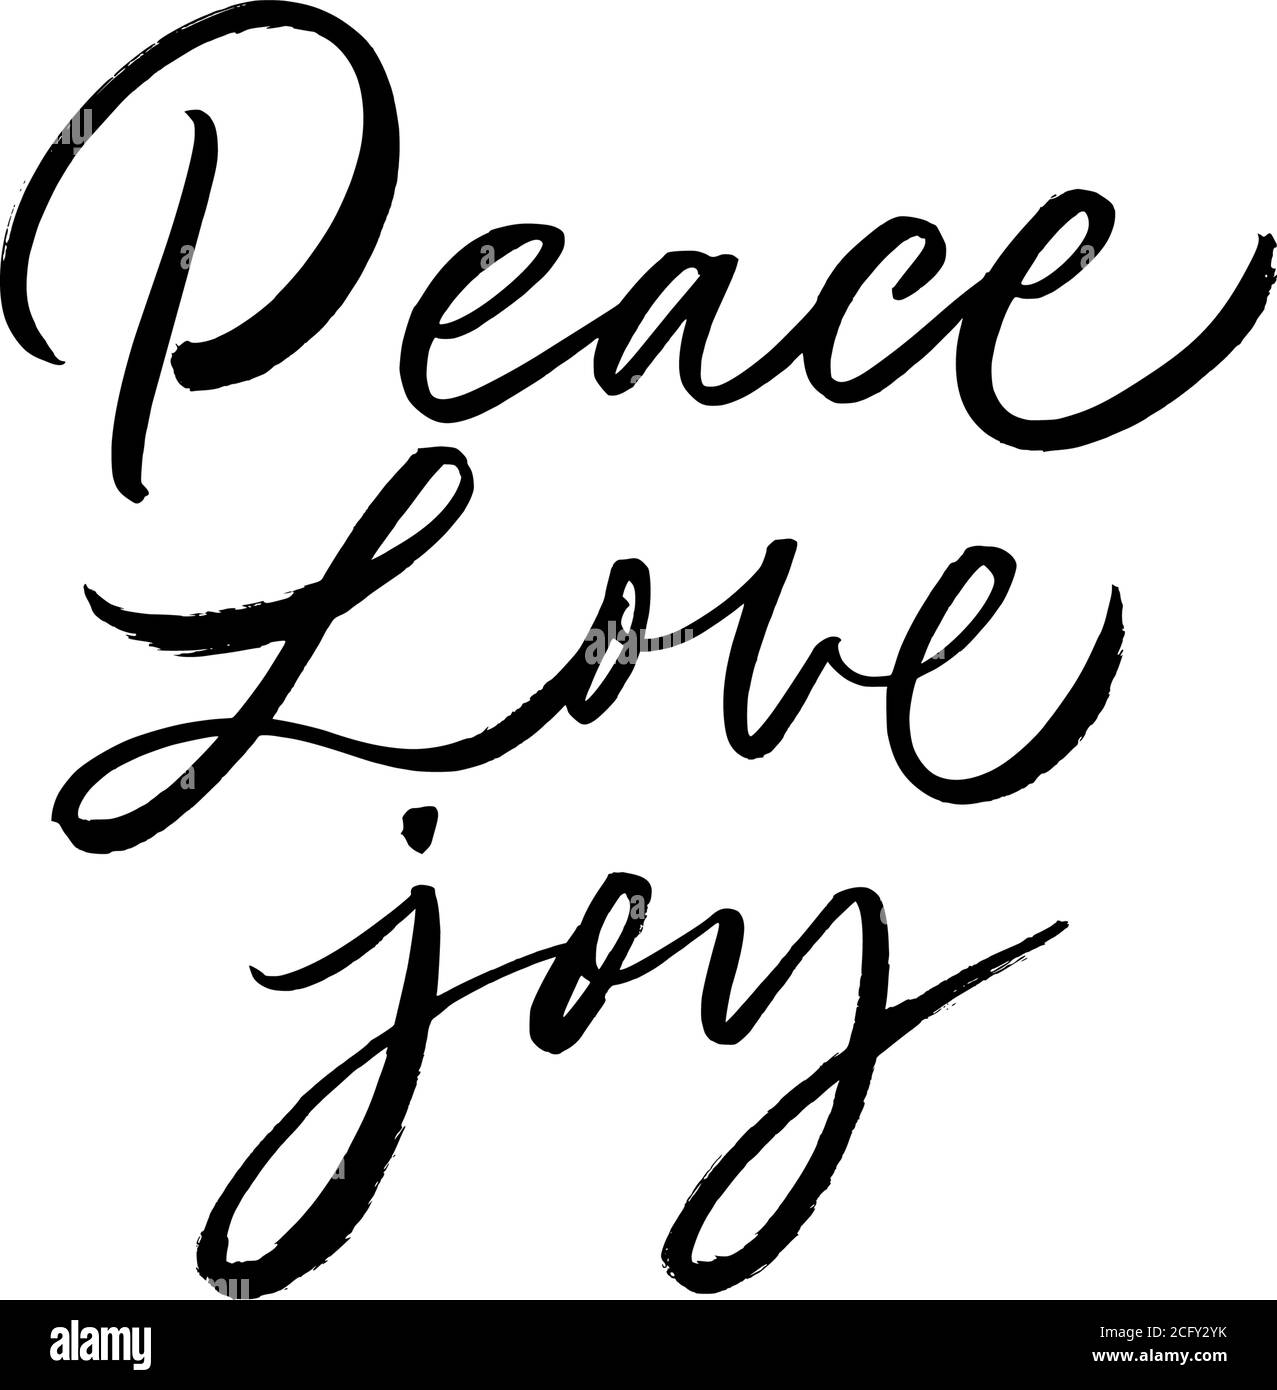 Peace, love, joy greeting card. Hand drawn phrase. Stock Vector